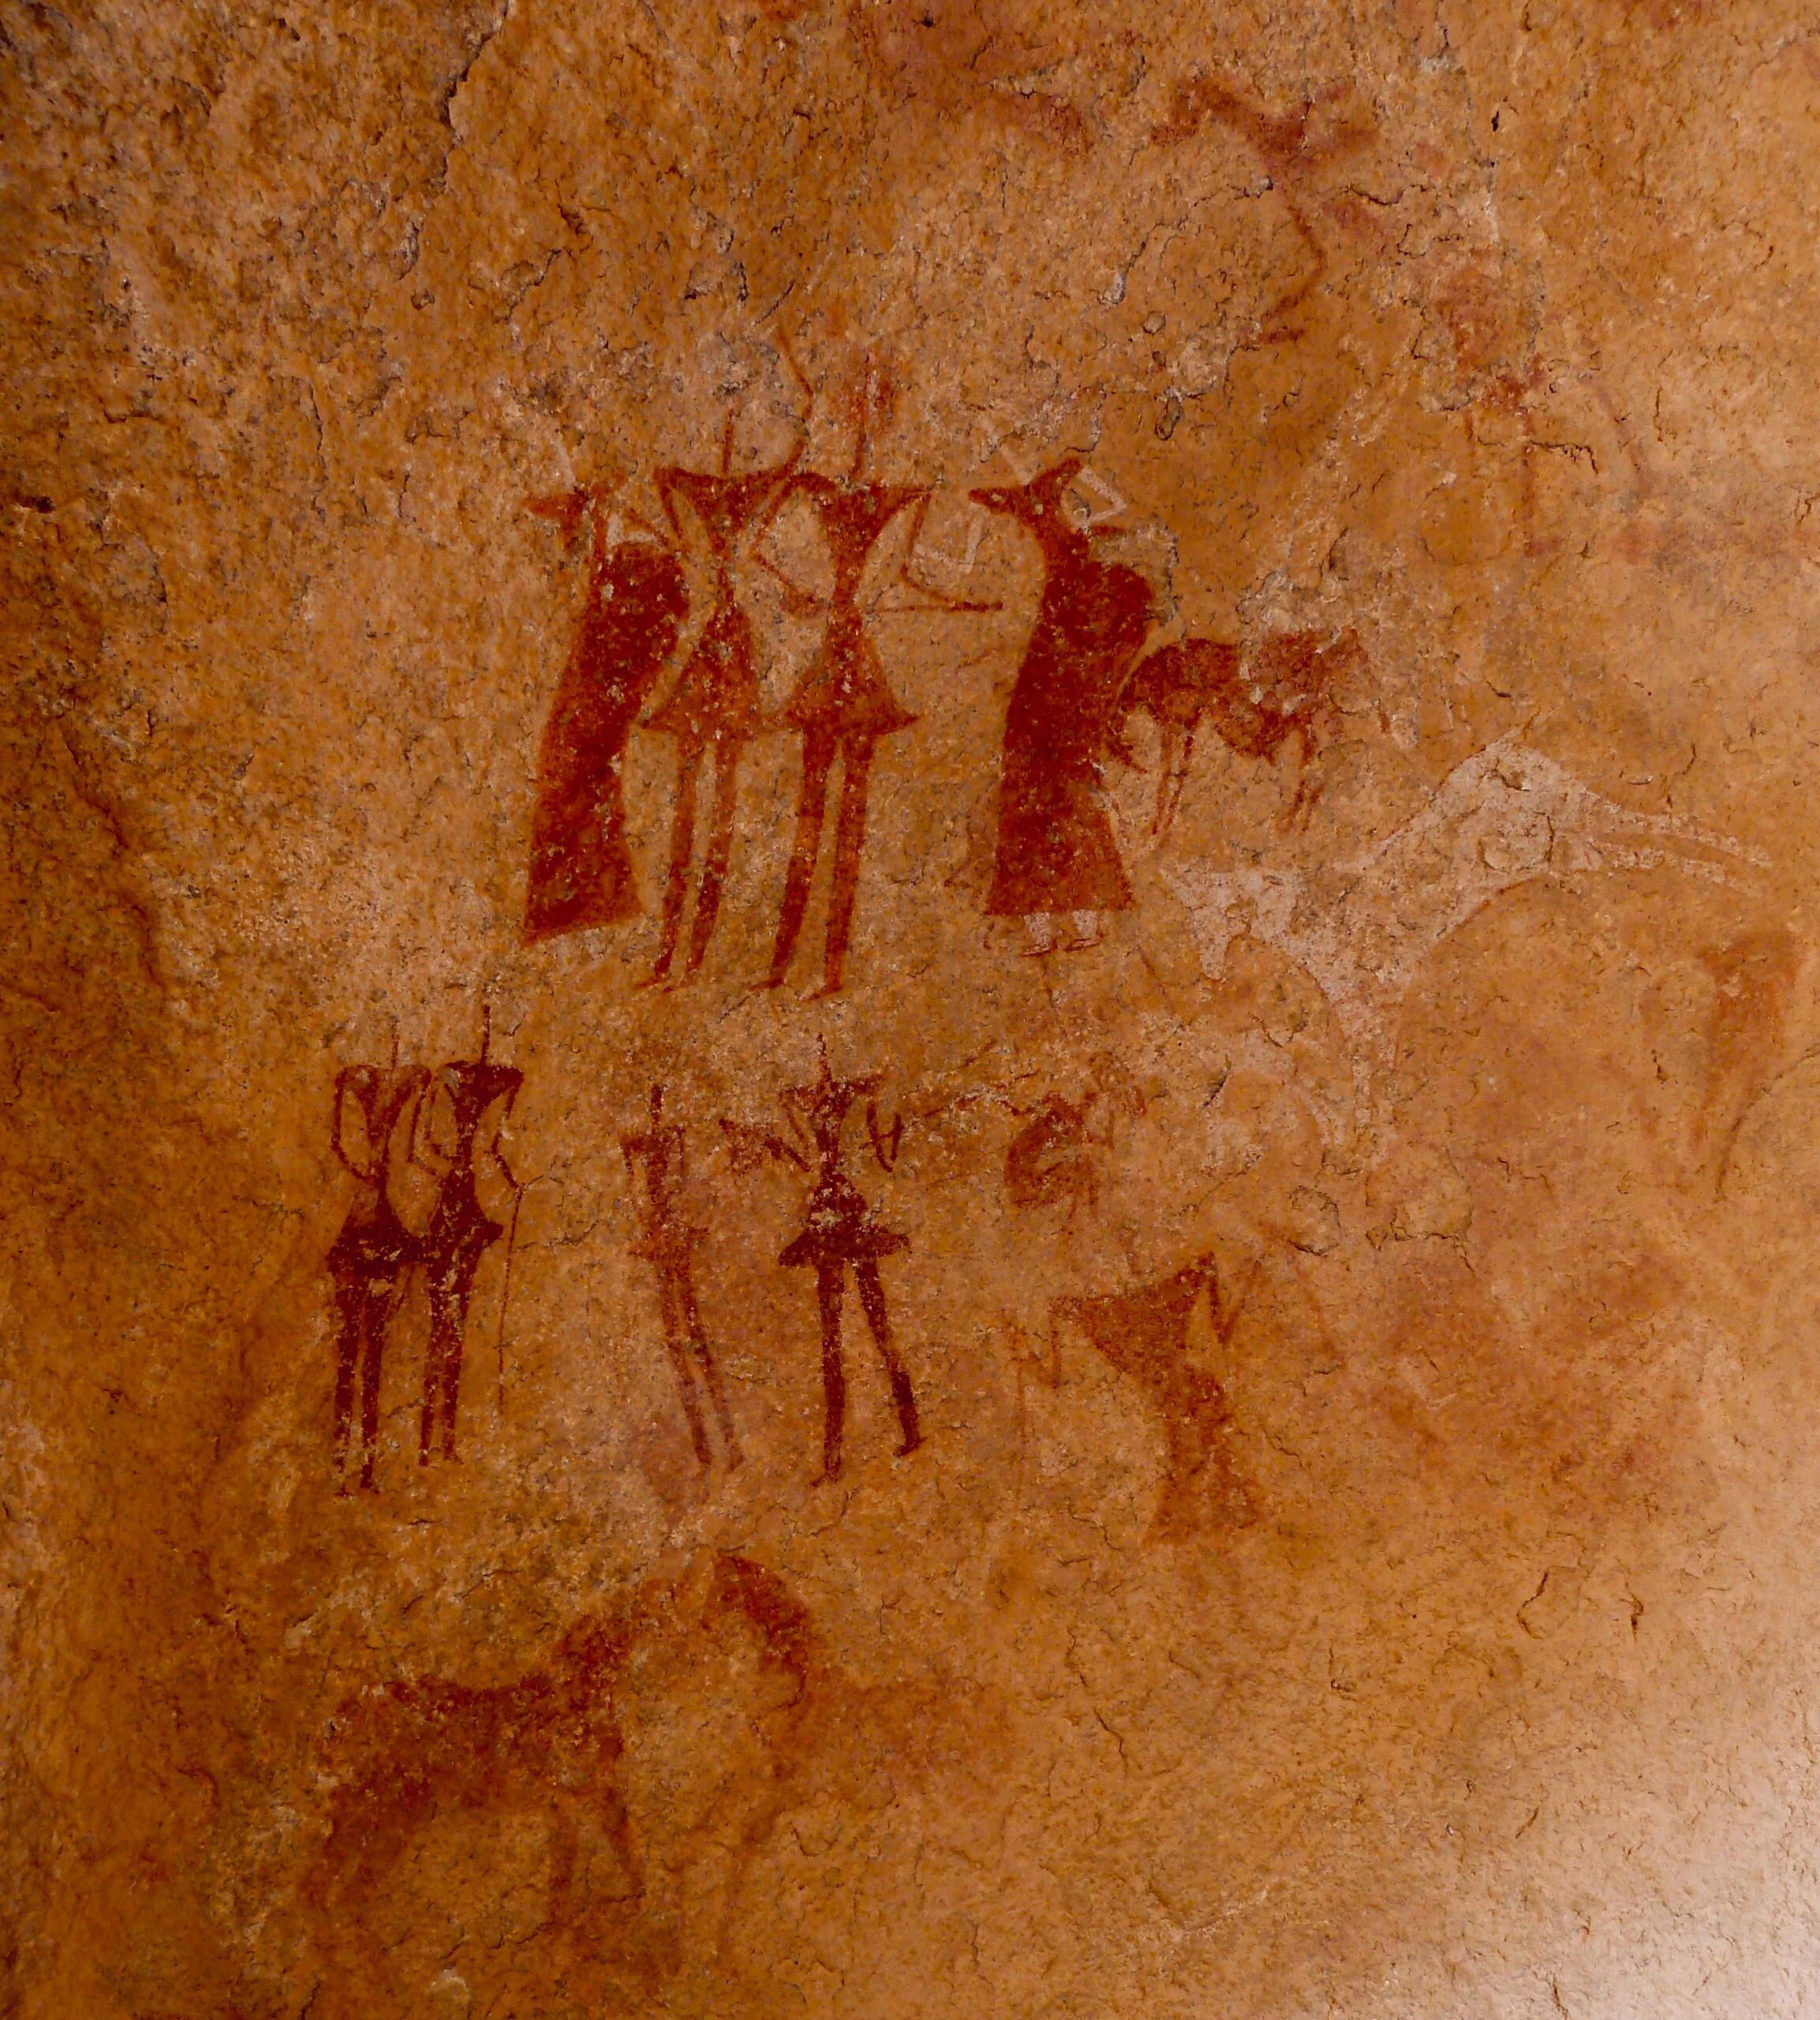 azzedine-rouichi-mini-jupe-in-the-algerian-Sahara-Mertoutek-near-Tamanrasset-6000-yaers-old-prehistoric-painting-photo-made-by-rouichi-